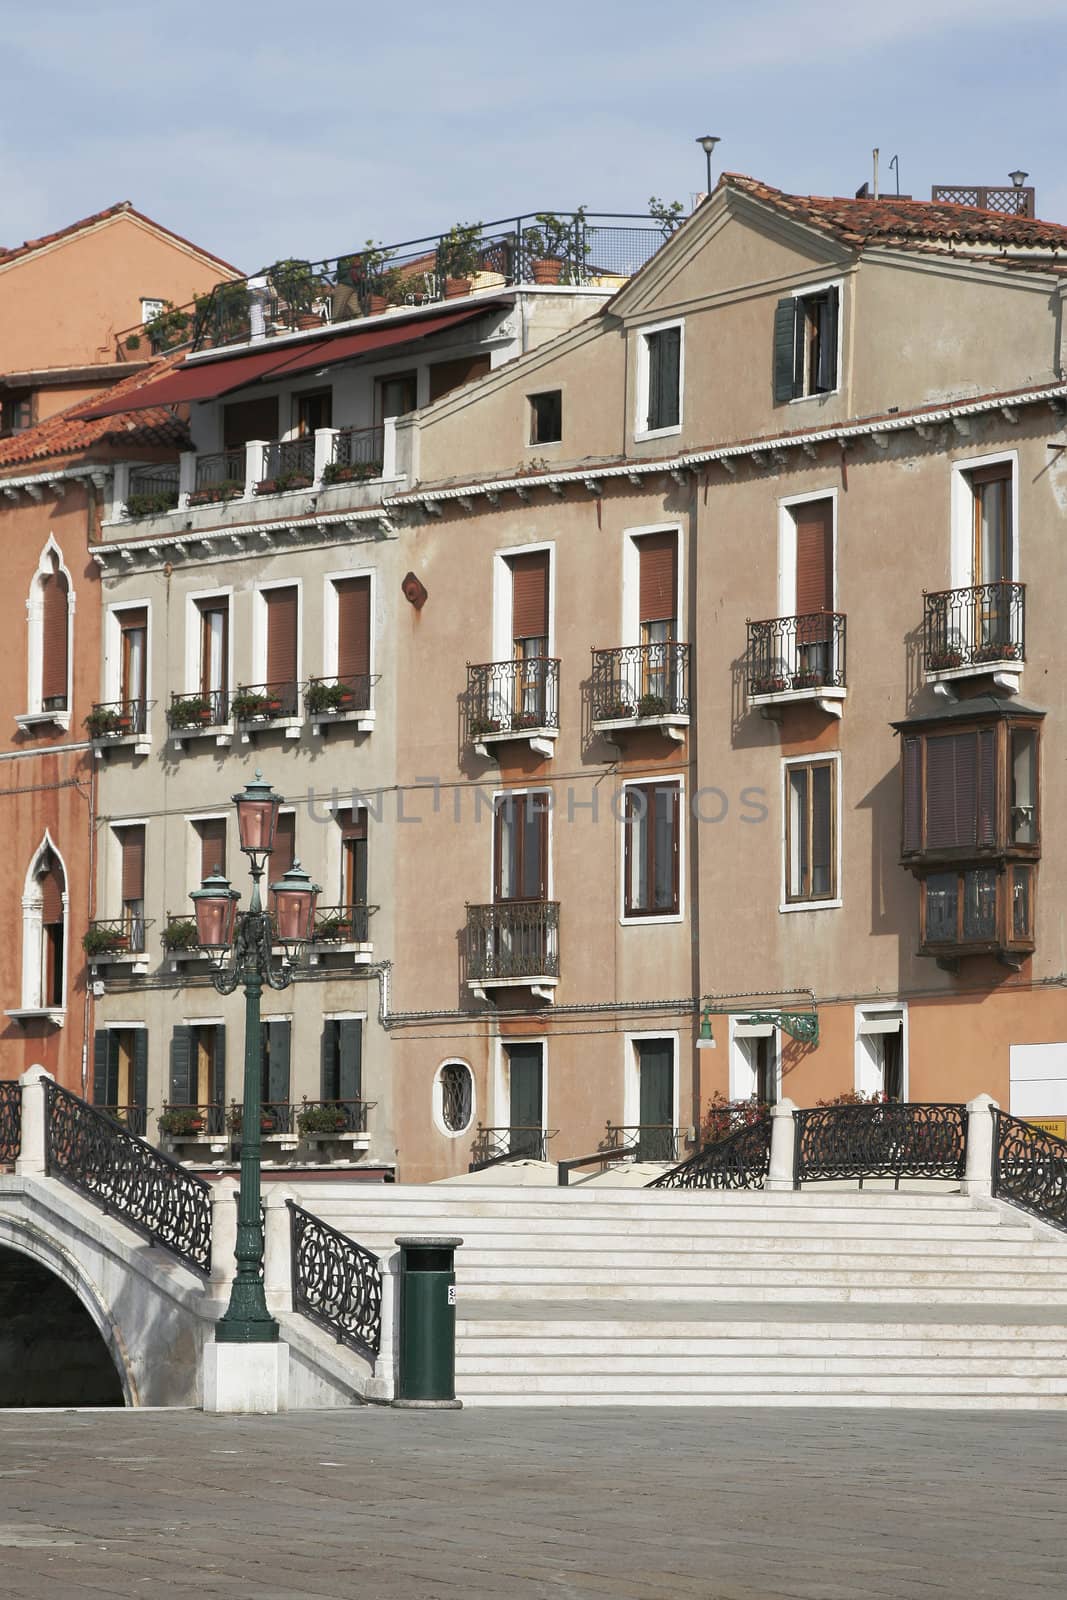 Venice, Italy - Little Bridge, Old Building Facade by thorsten